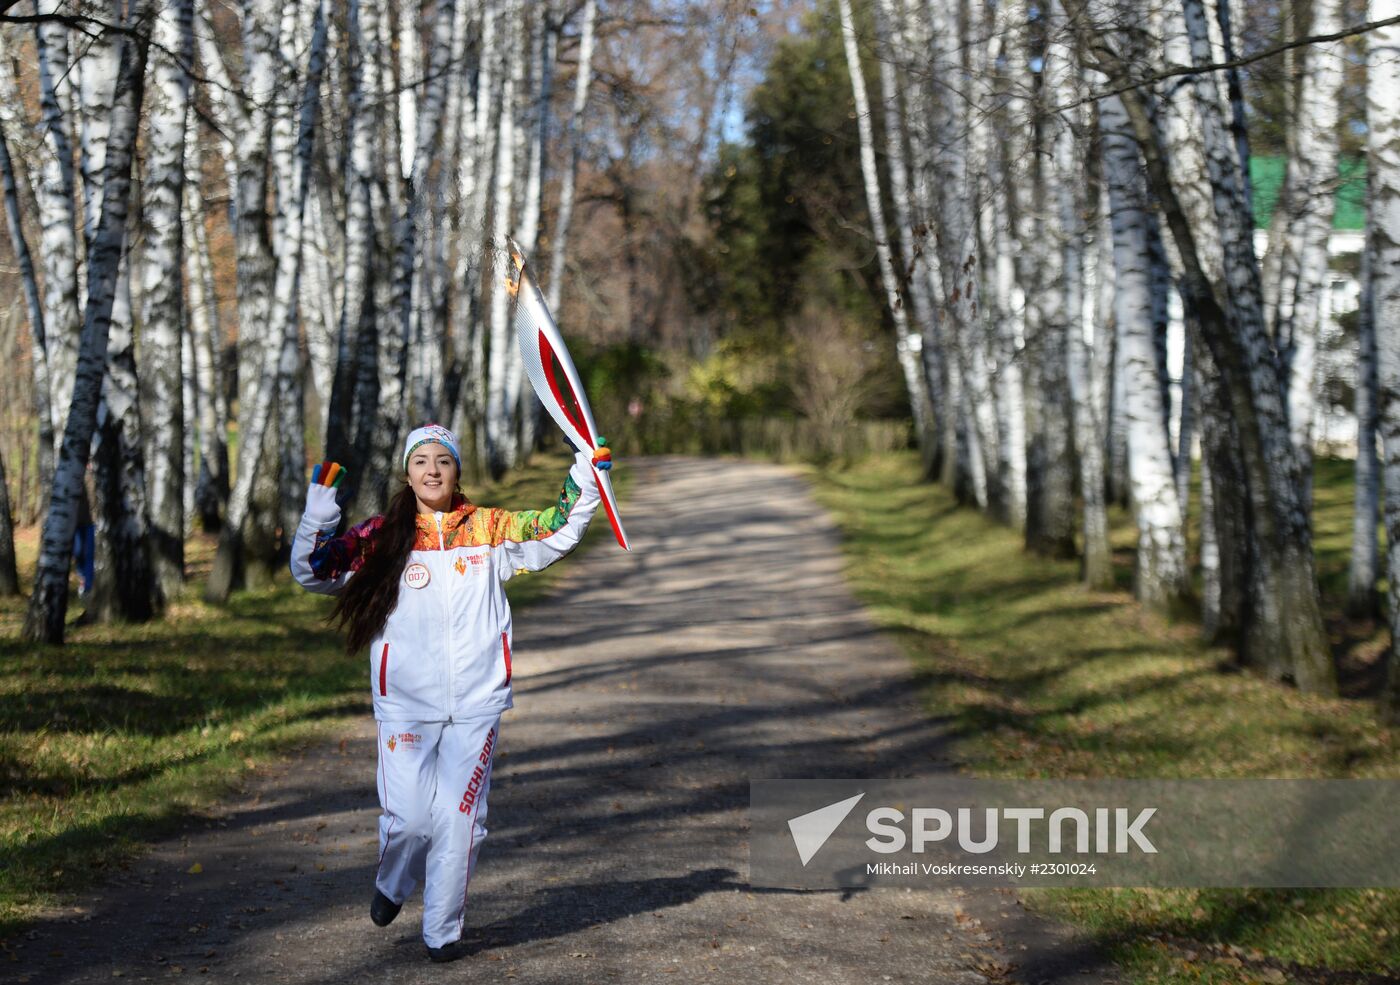 Olympic torch relay in Tula Region